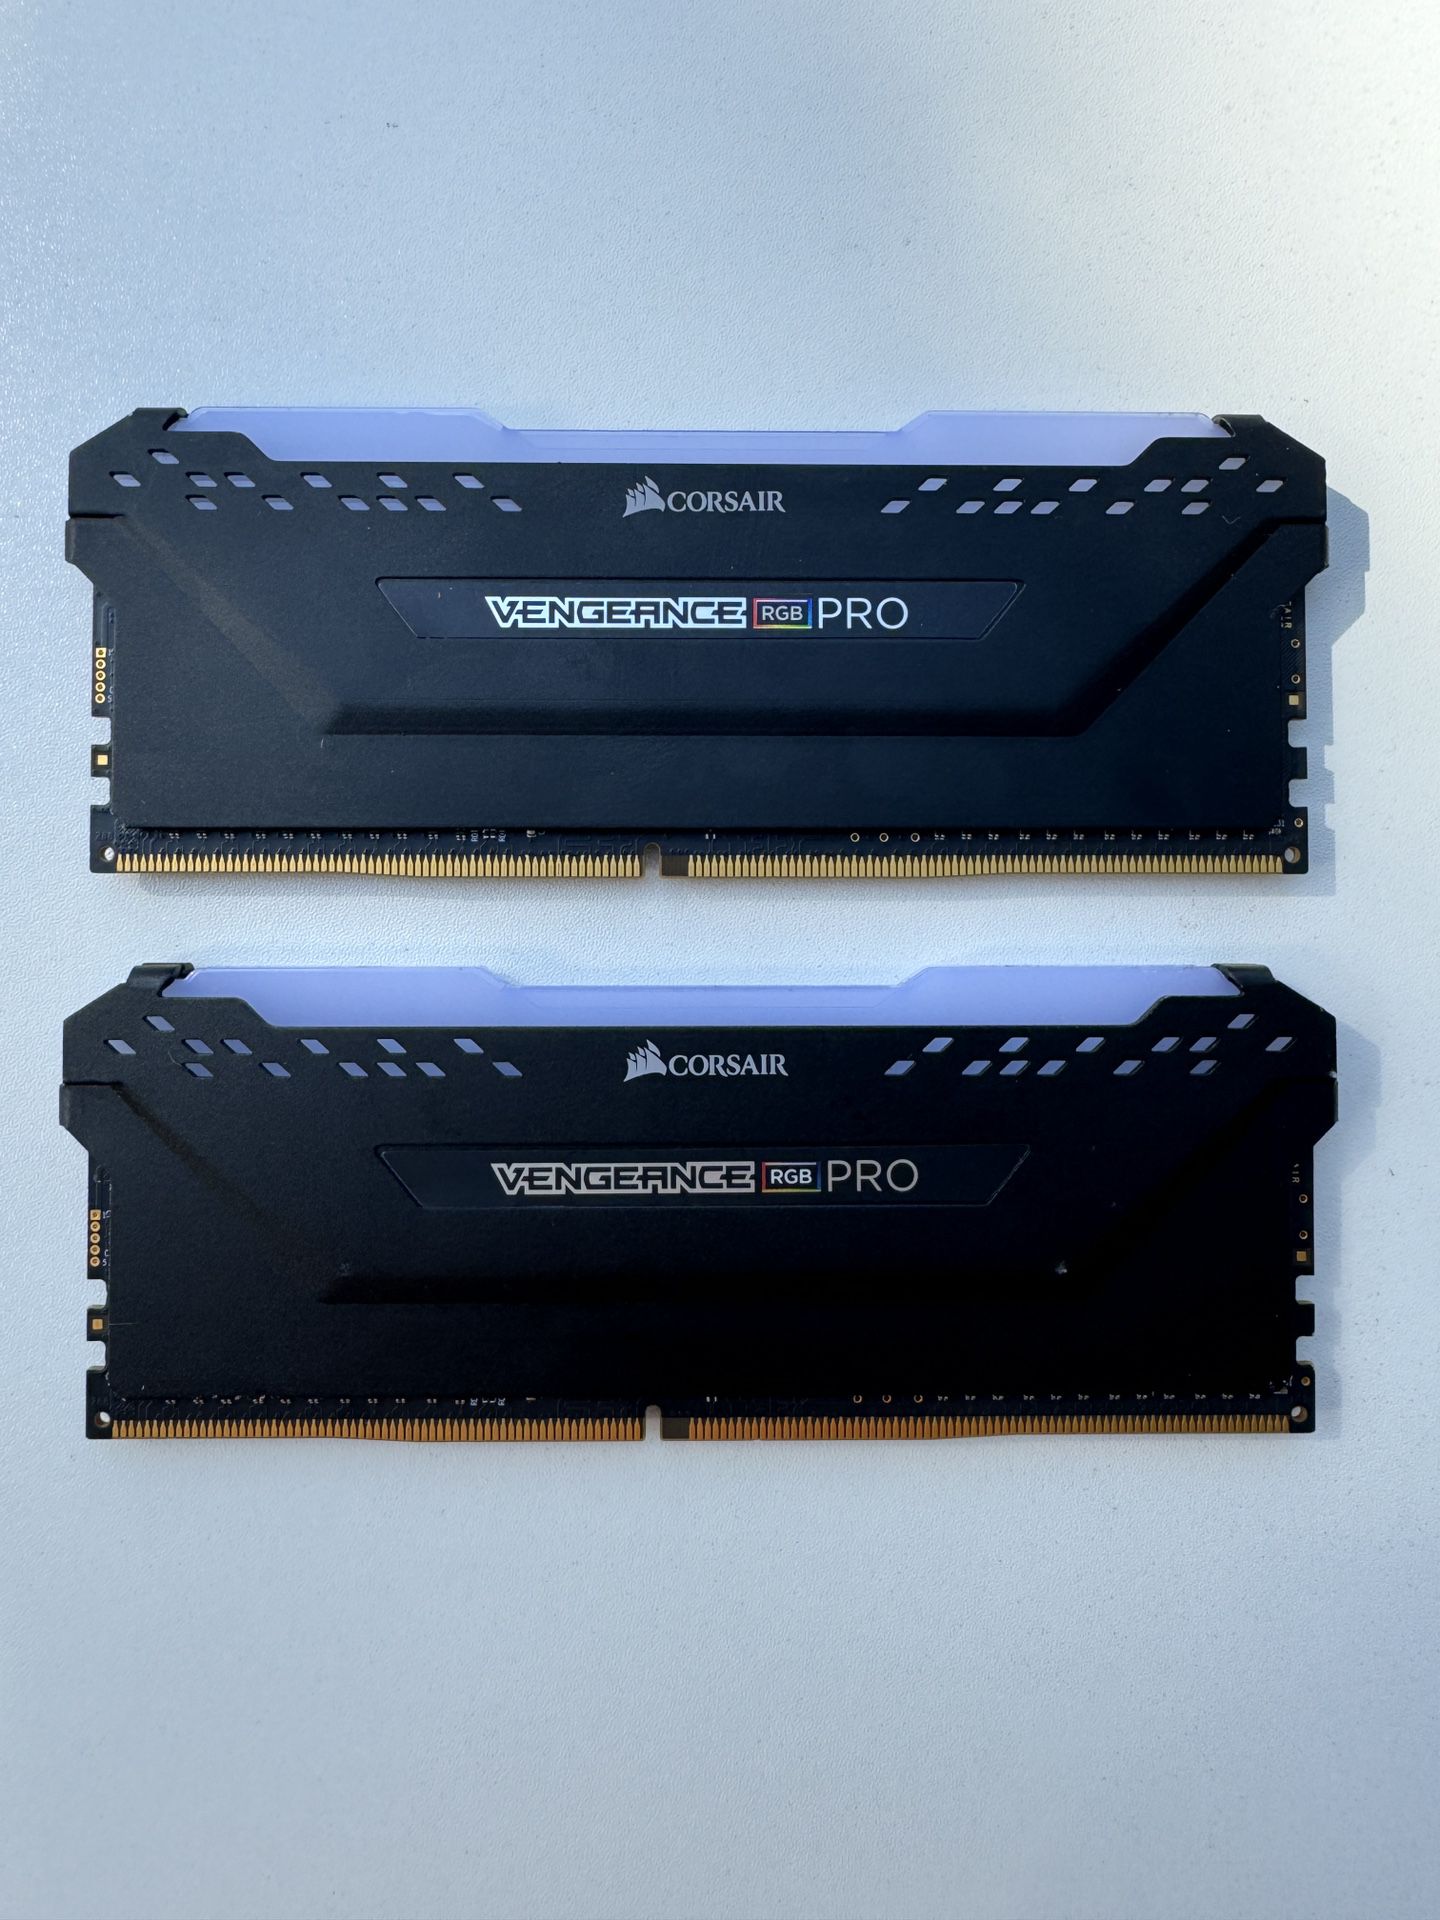 CORSAIR Vengeance 16GB (2 x 8GB) RGB PRO 3200MHz DDR4.